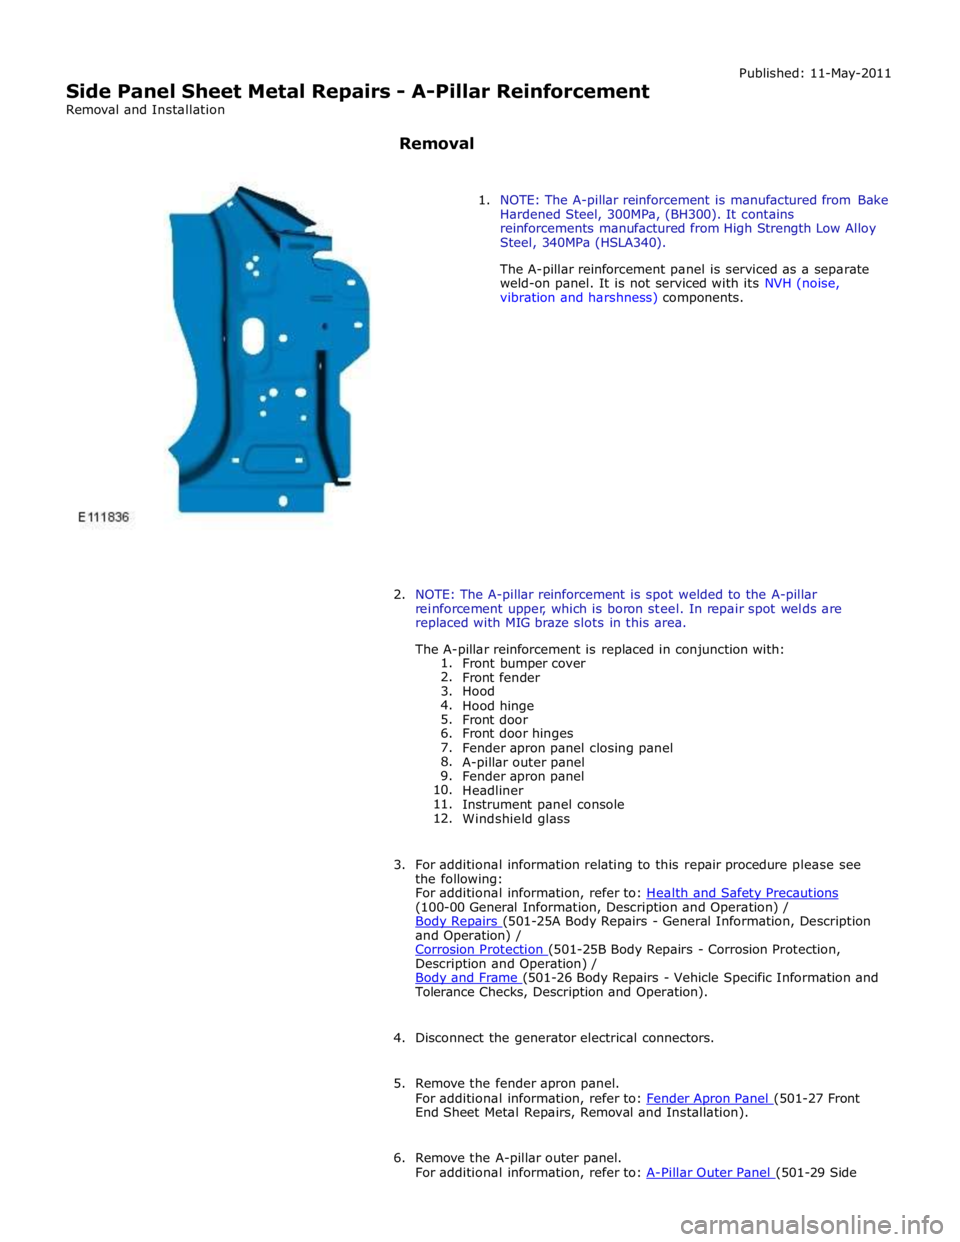 JAGUAR XFR 2010 1.G Workshop Manual (100-00 General Information, Description and Operation) / 
Body Repairs (501-25A Body Repairs - General Information, Description and Operation) / 
Corrosion Protection (501-25B Body Repairs - Corrosio